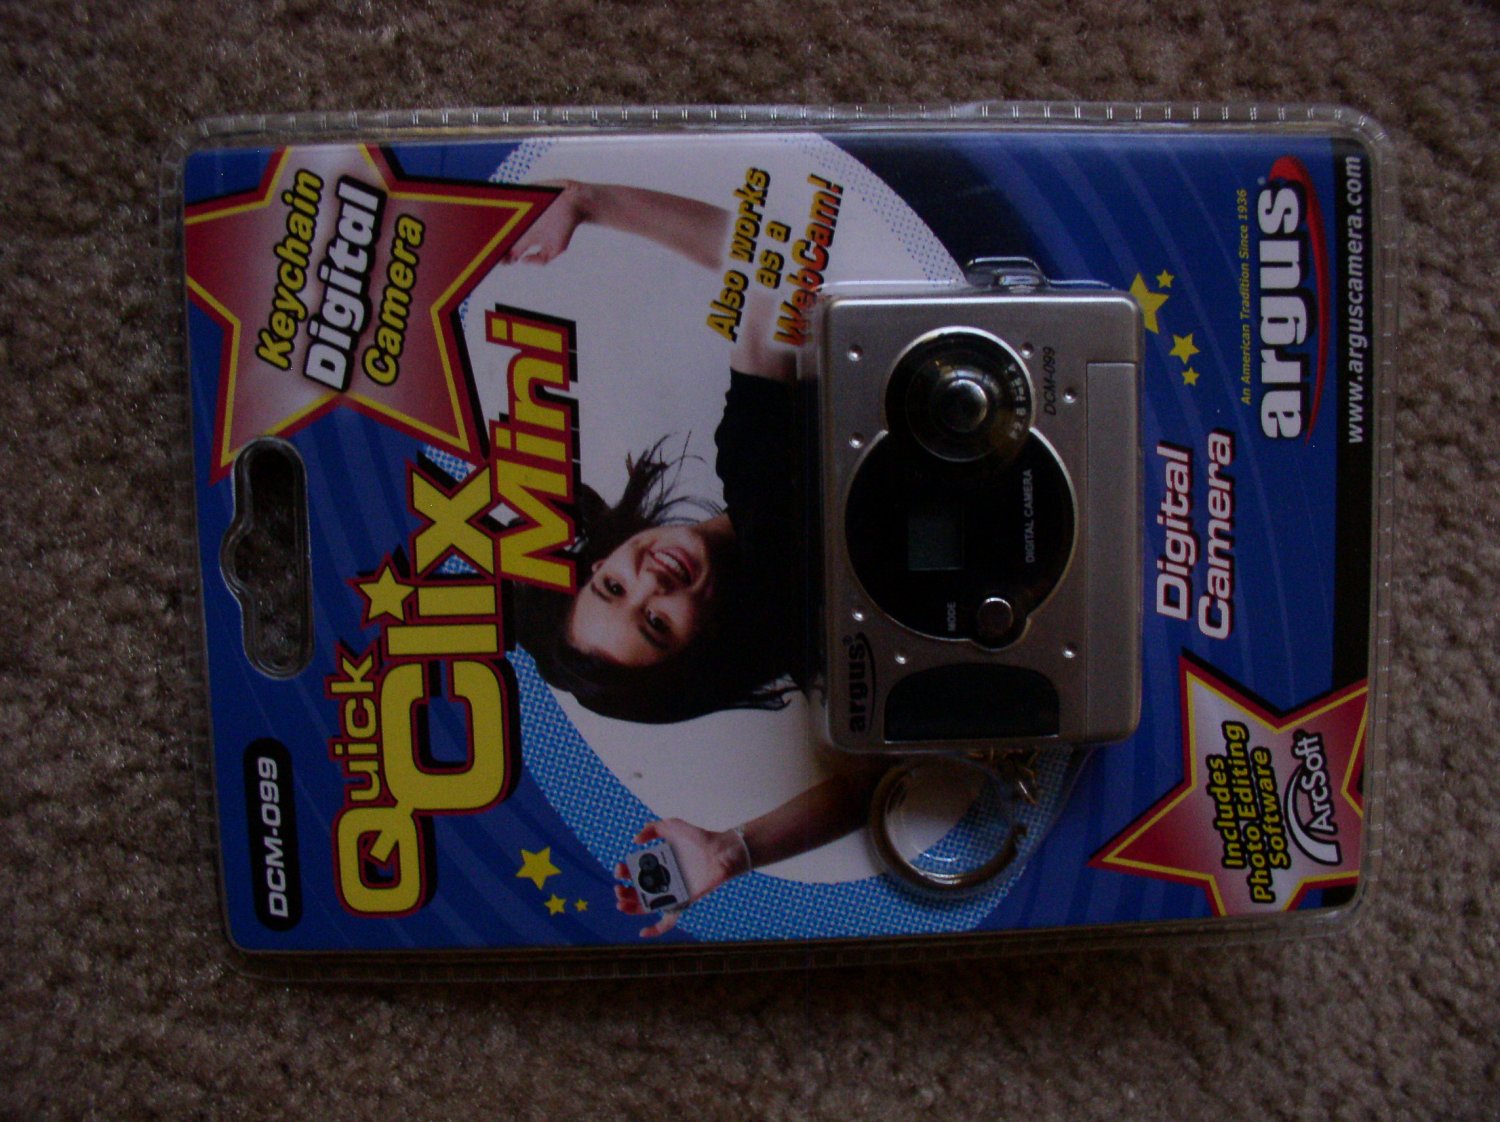 New Argus Quick Clix Mini DCM-099 300K Keychain Digital Camera/PC Camera